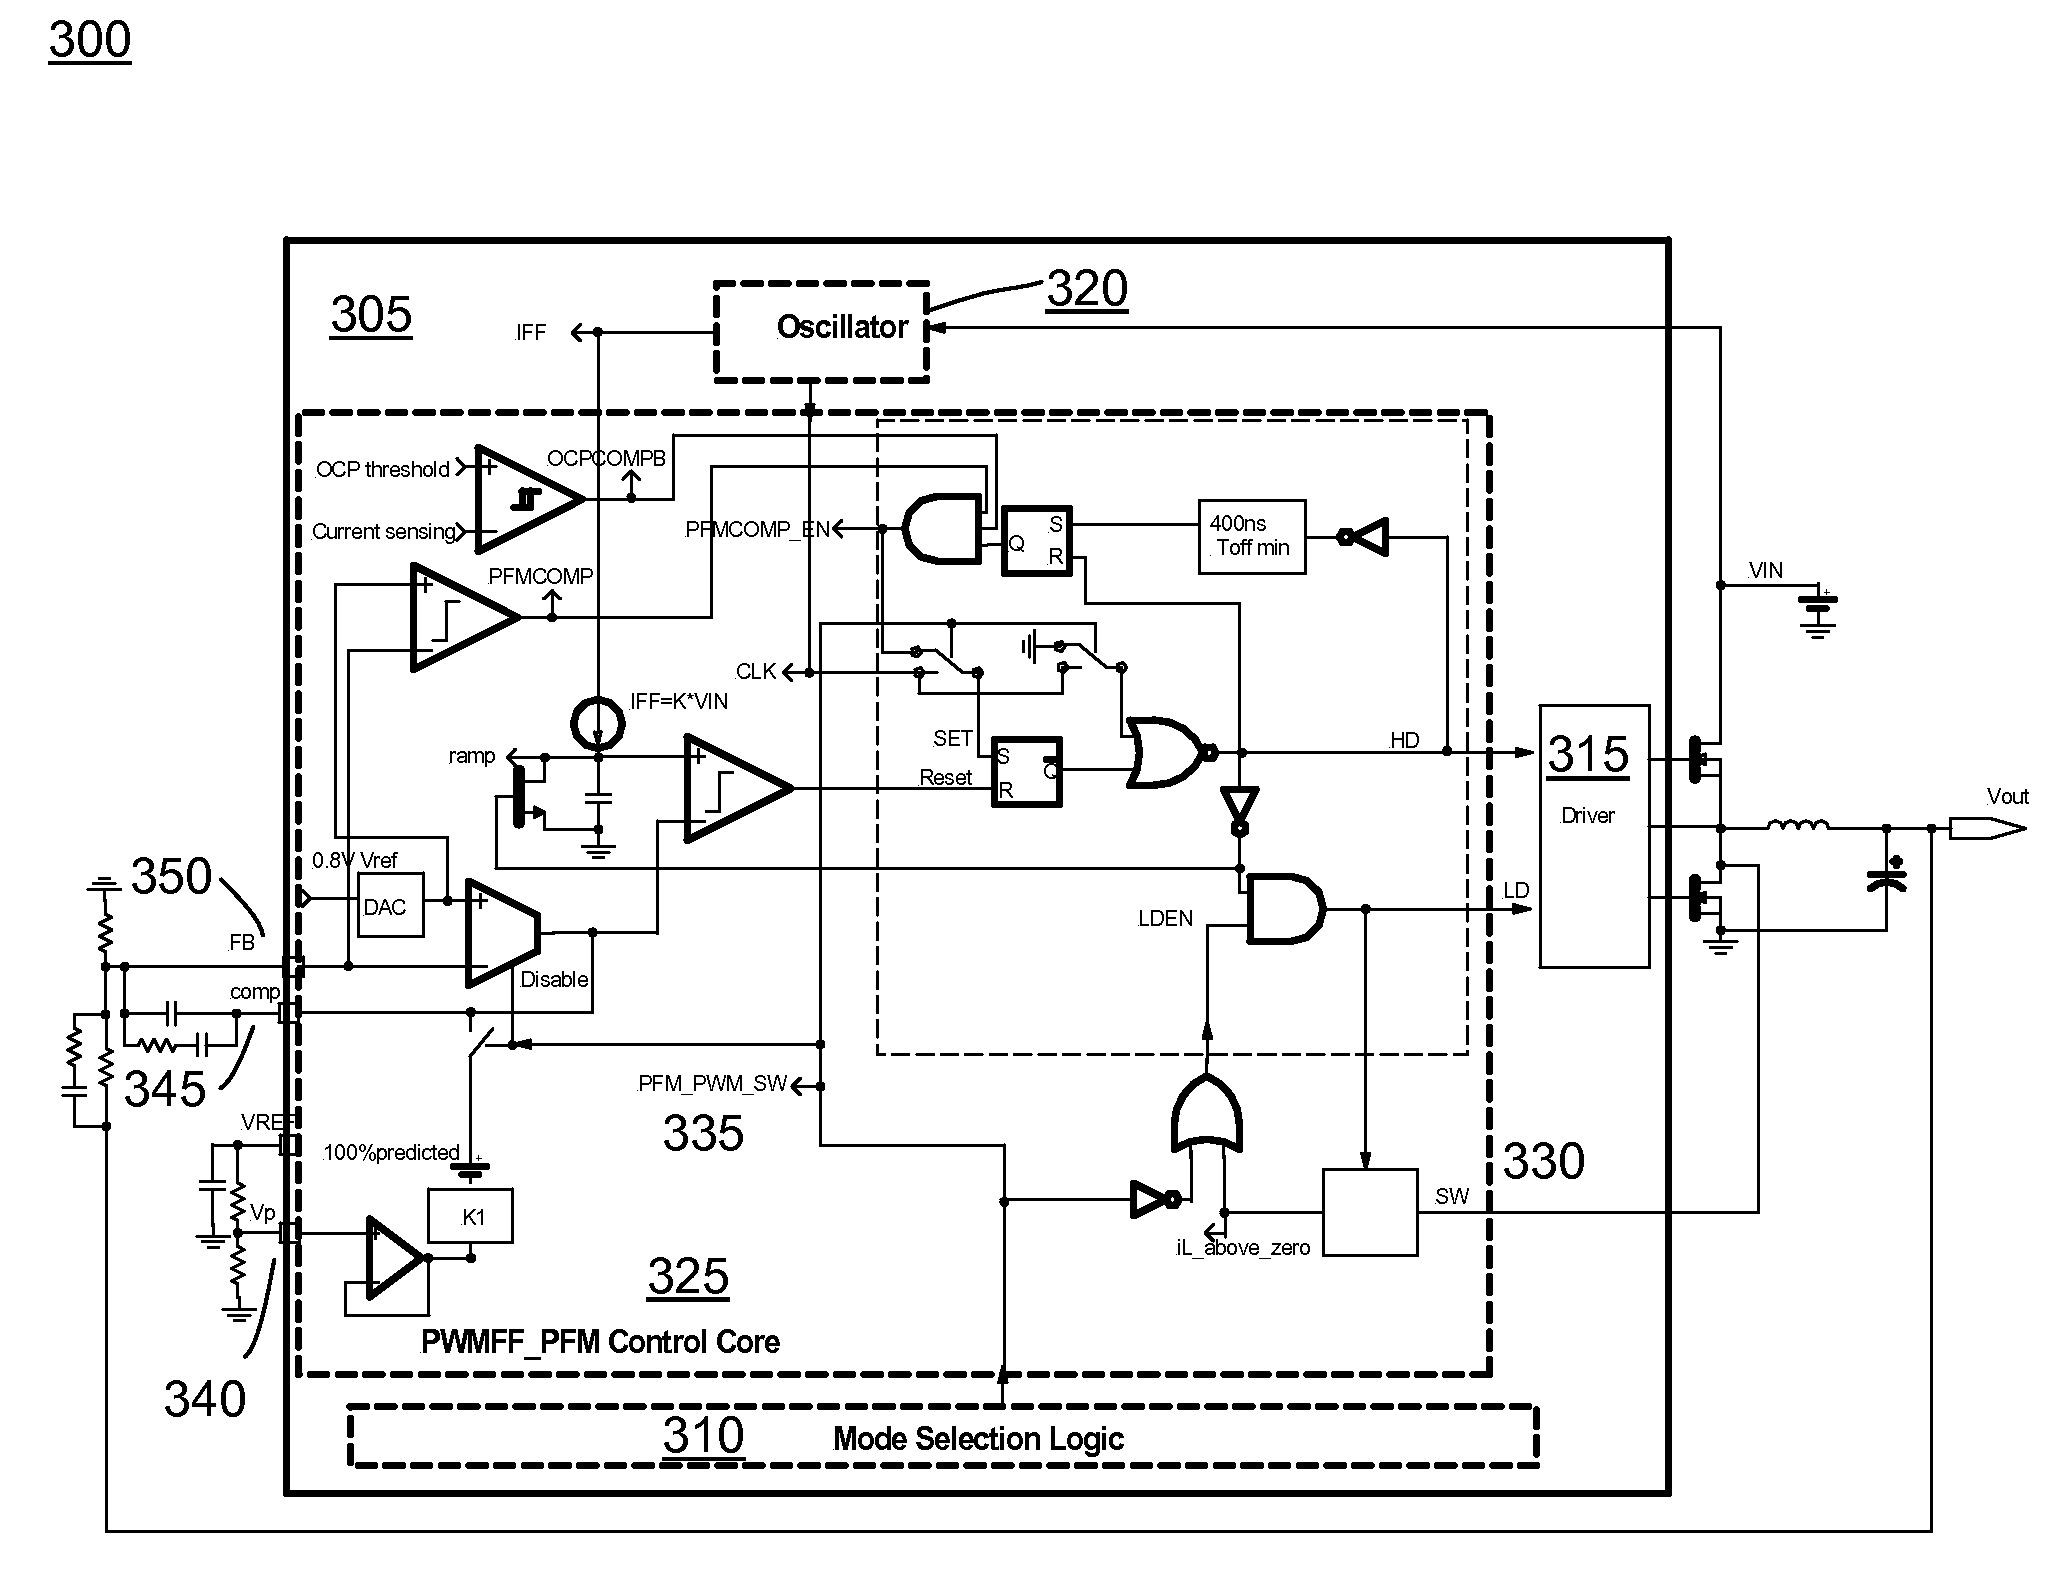 Voltage mode pwmff-pfm/skip combo controller